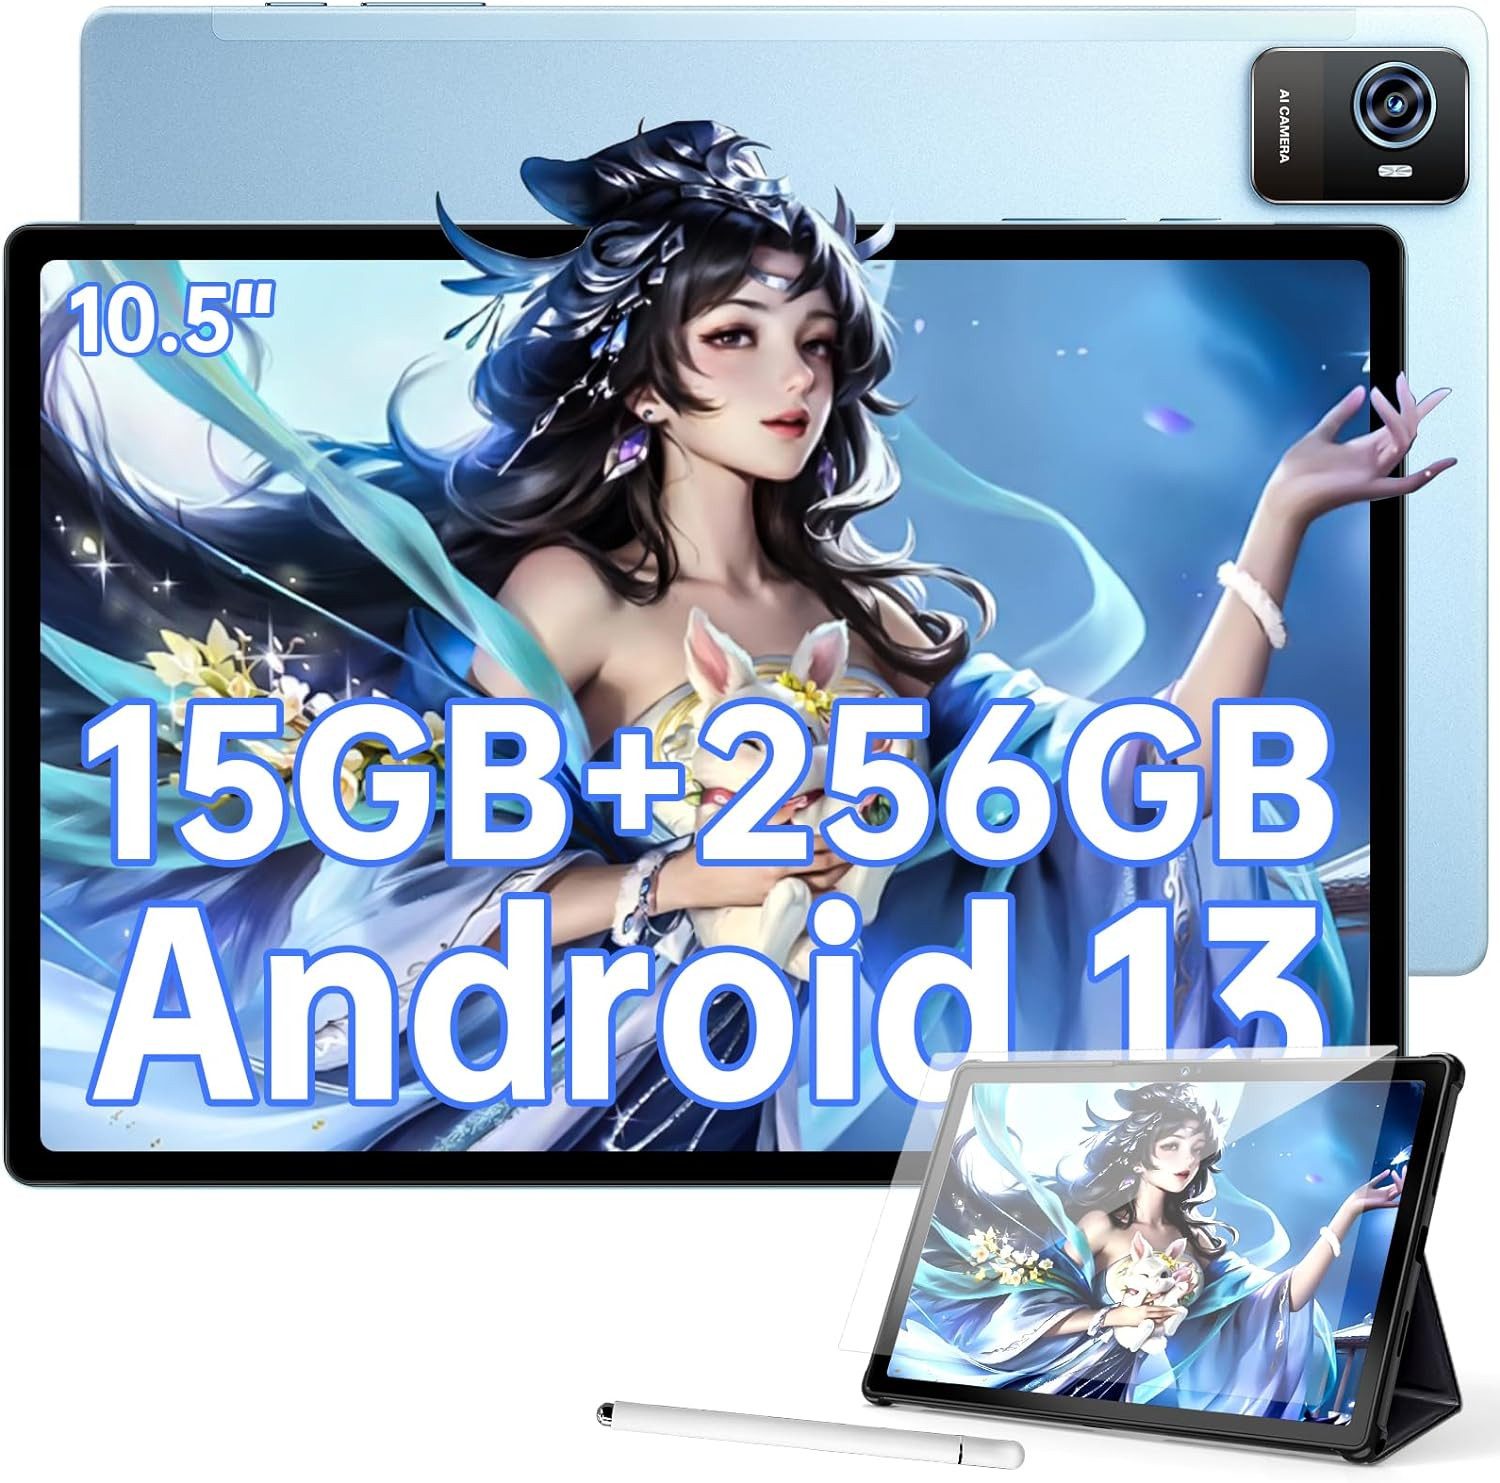 OUKITEL 15GB RAM 8250mAh Akku Gaming PC Widevine L1/Octa-Core-Prozessor Tablet (10,5", 256 GB, Android 13, Dual SIM LTE/5G WiFi, Technologisches Kraftpaket für Ihr digitales Leben)